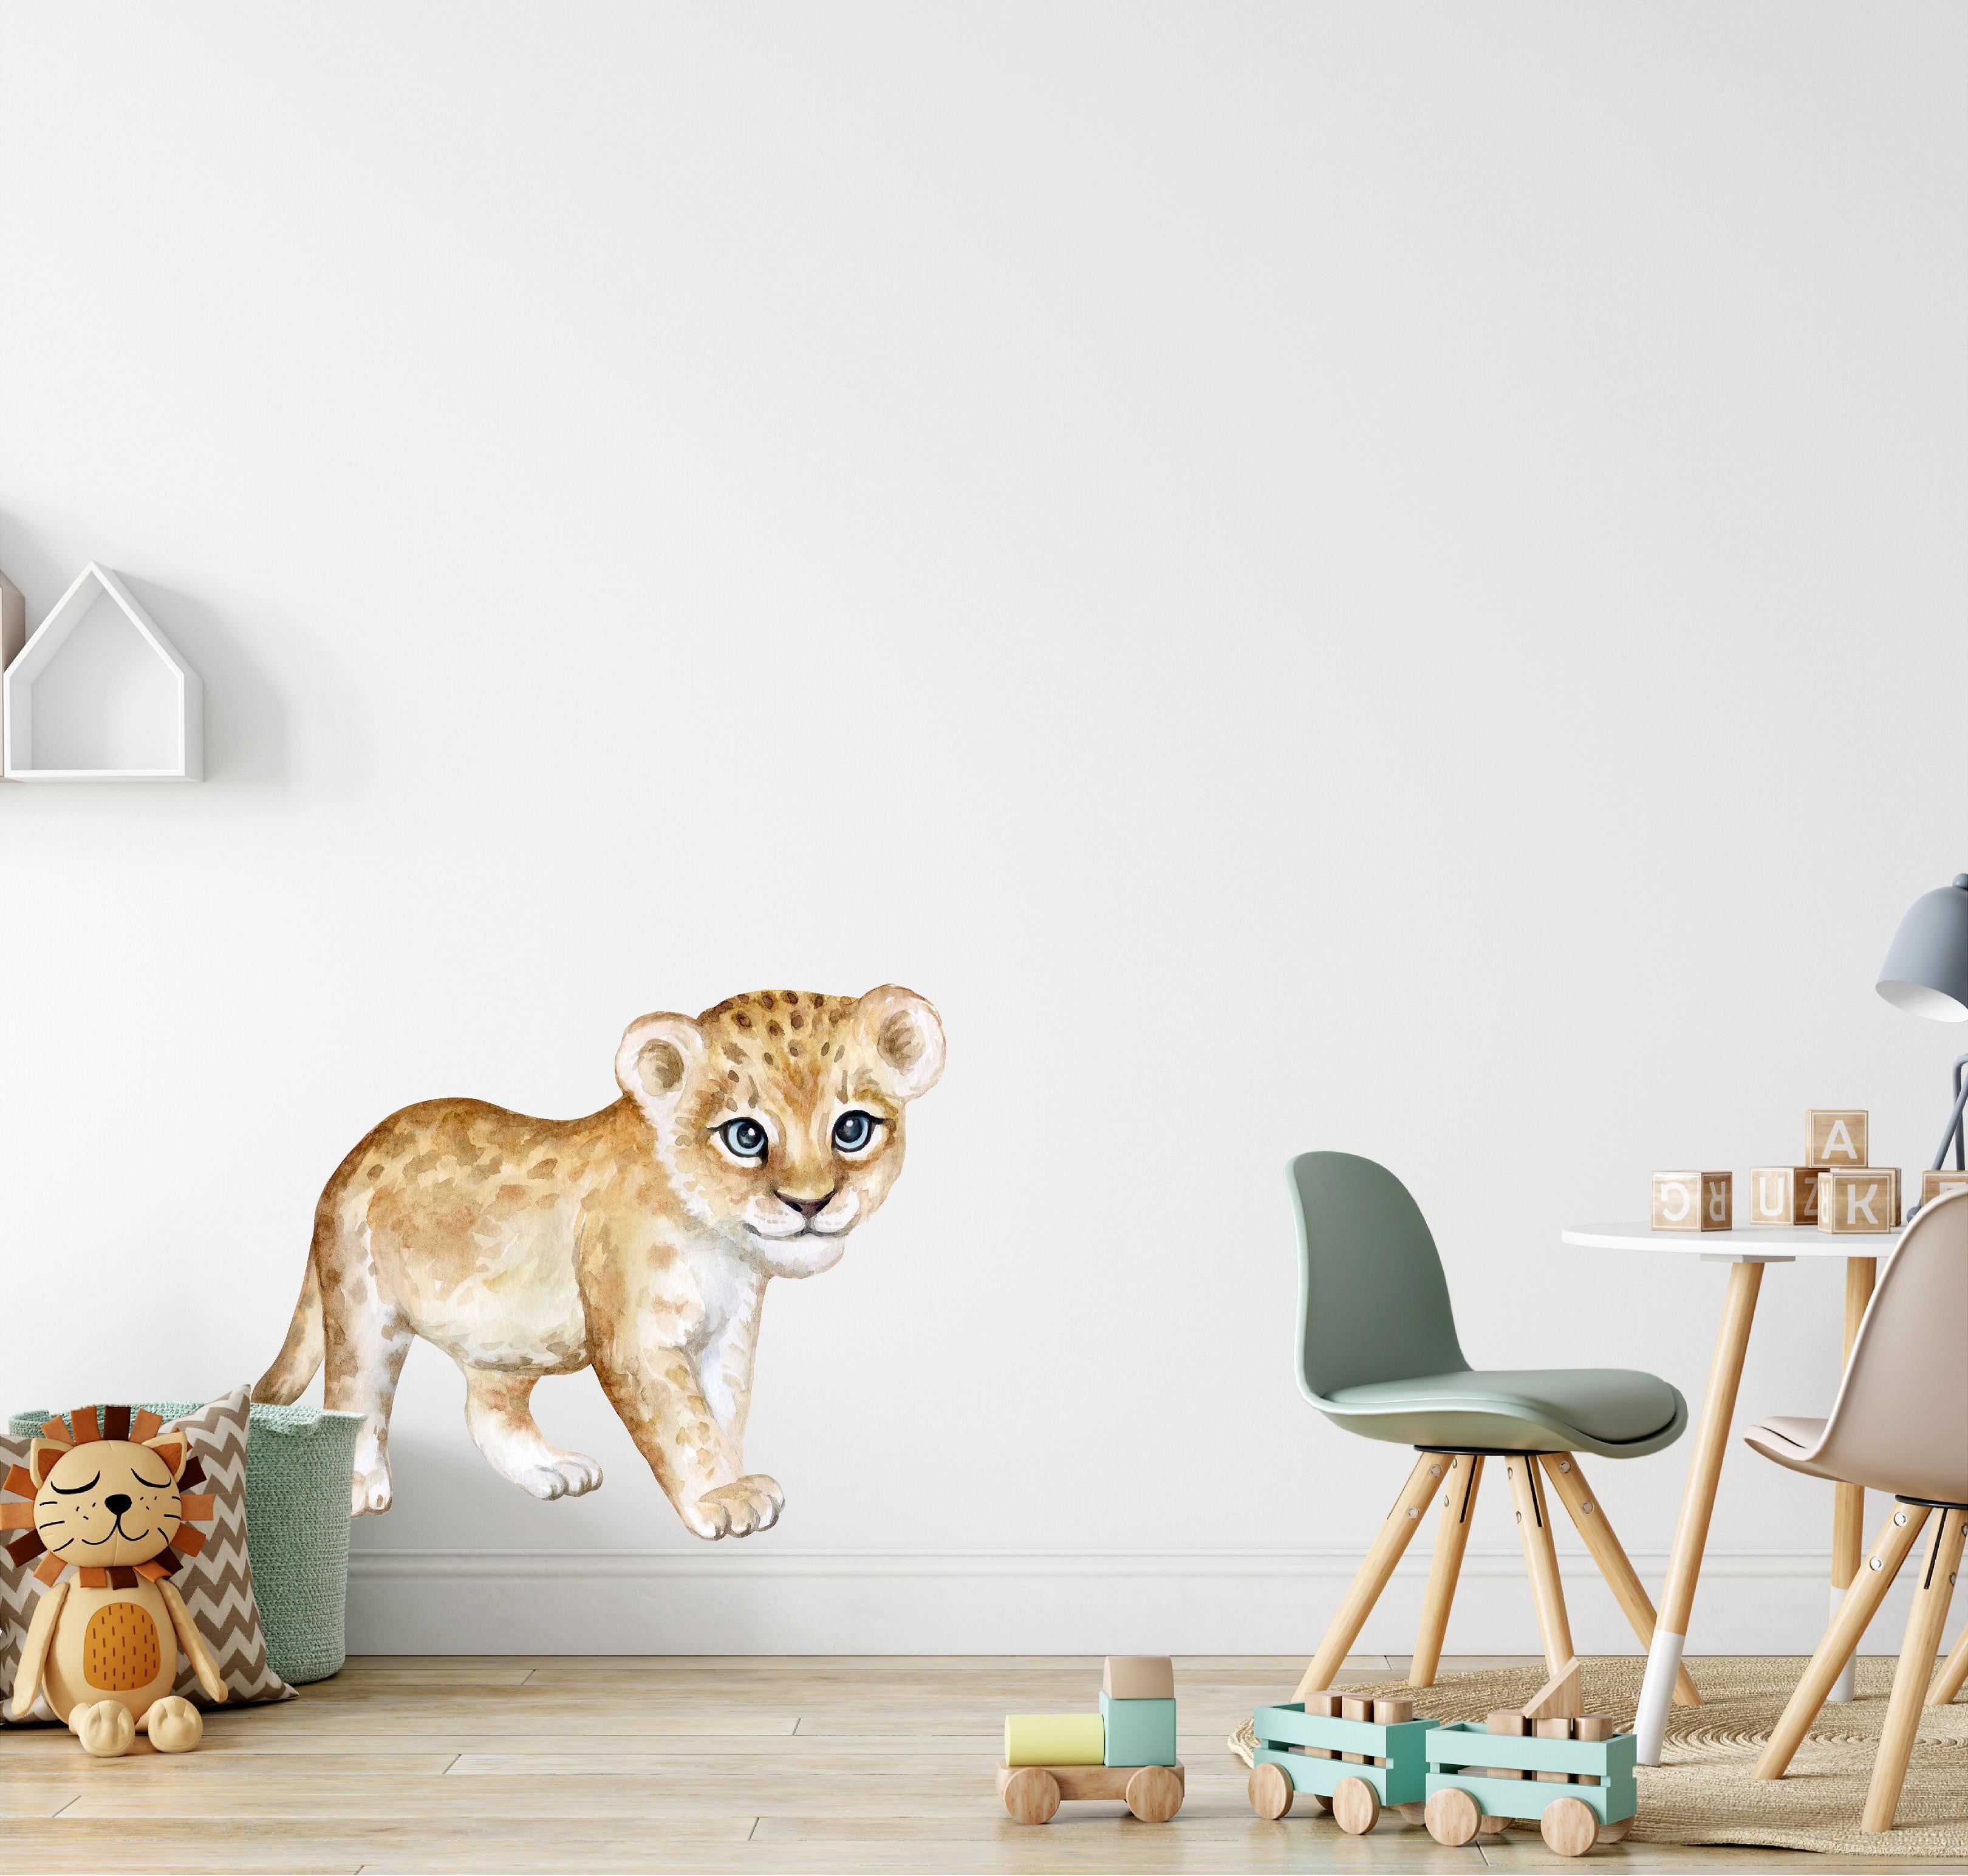 Baby Lion Cub #1 Wall Decal Safari Animal Wall Sticker Removable Fabric Vinyl | DecalBaby